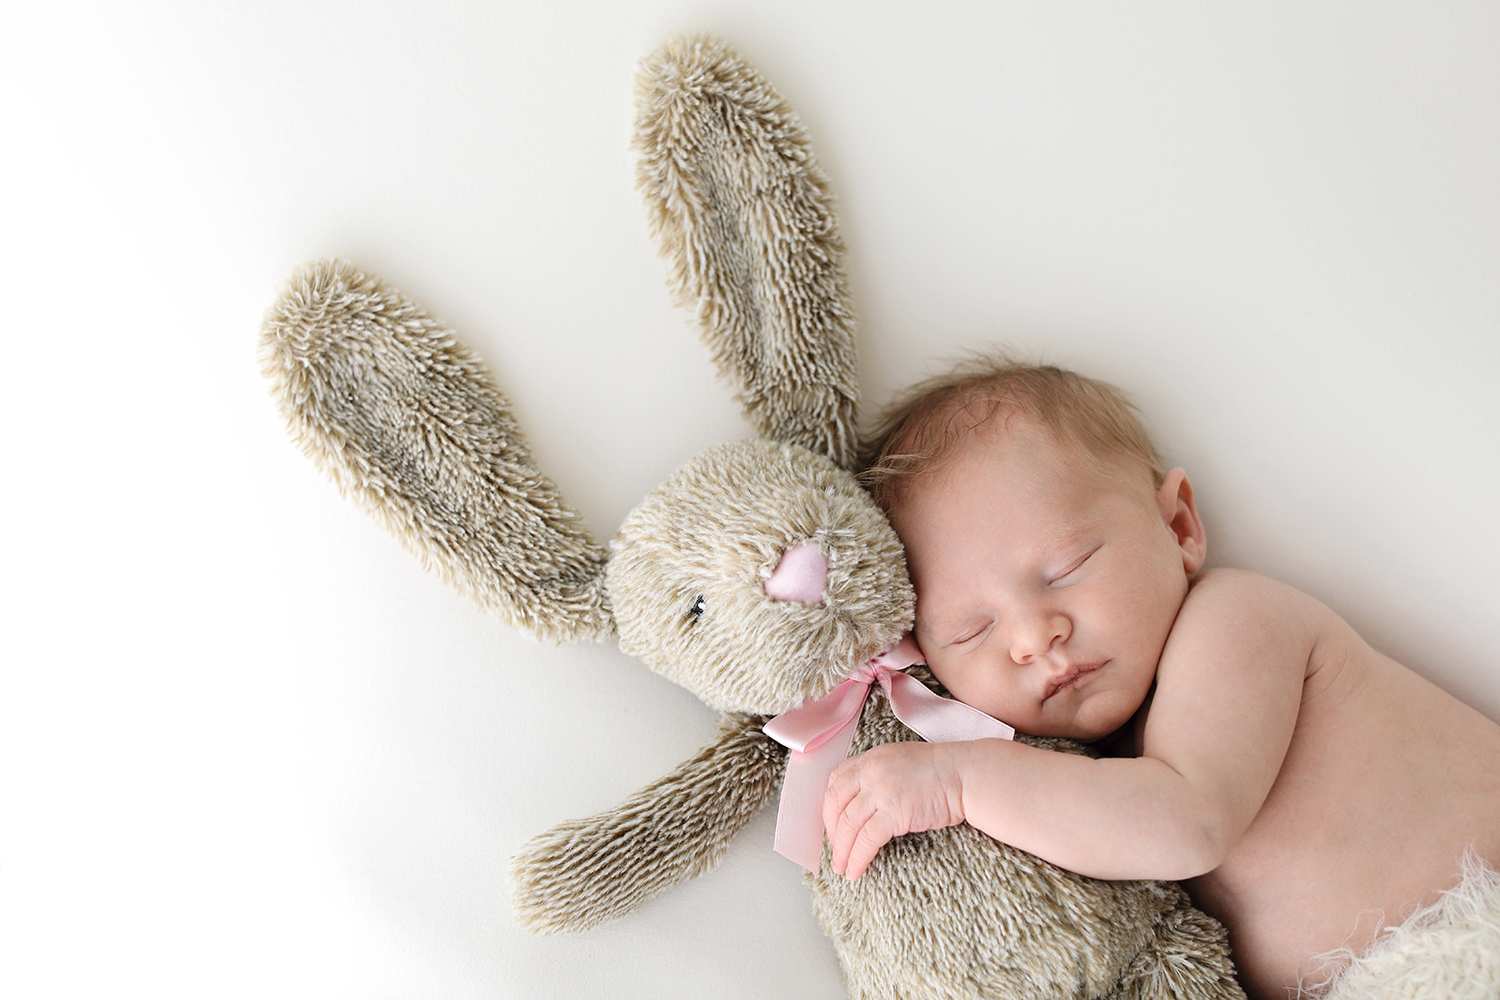 a sleeping baby holding a stuffed animal